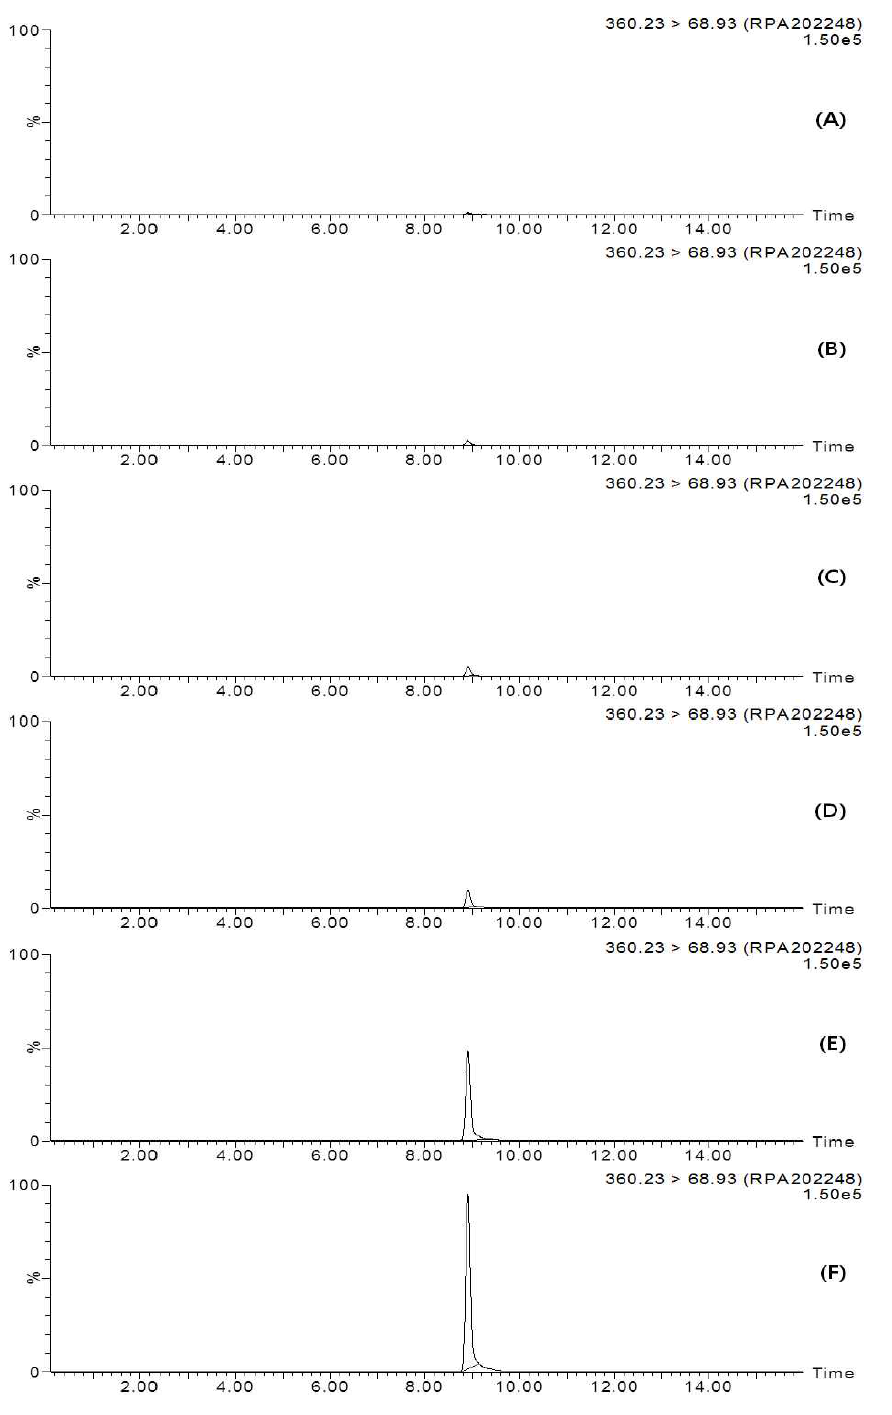 LC-MS/MS chromatograms of isoxaflutole diketonitrile standard in potato matrix (A) 0.02 mg/kg, (B) 0.05 mg/kg, (C) 0.1 mg/kg, (D) 0.2 mg/kg, (E) 1 mg/kg, and (F) 2 mg/kg